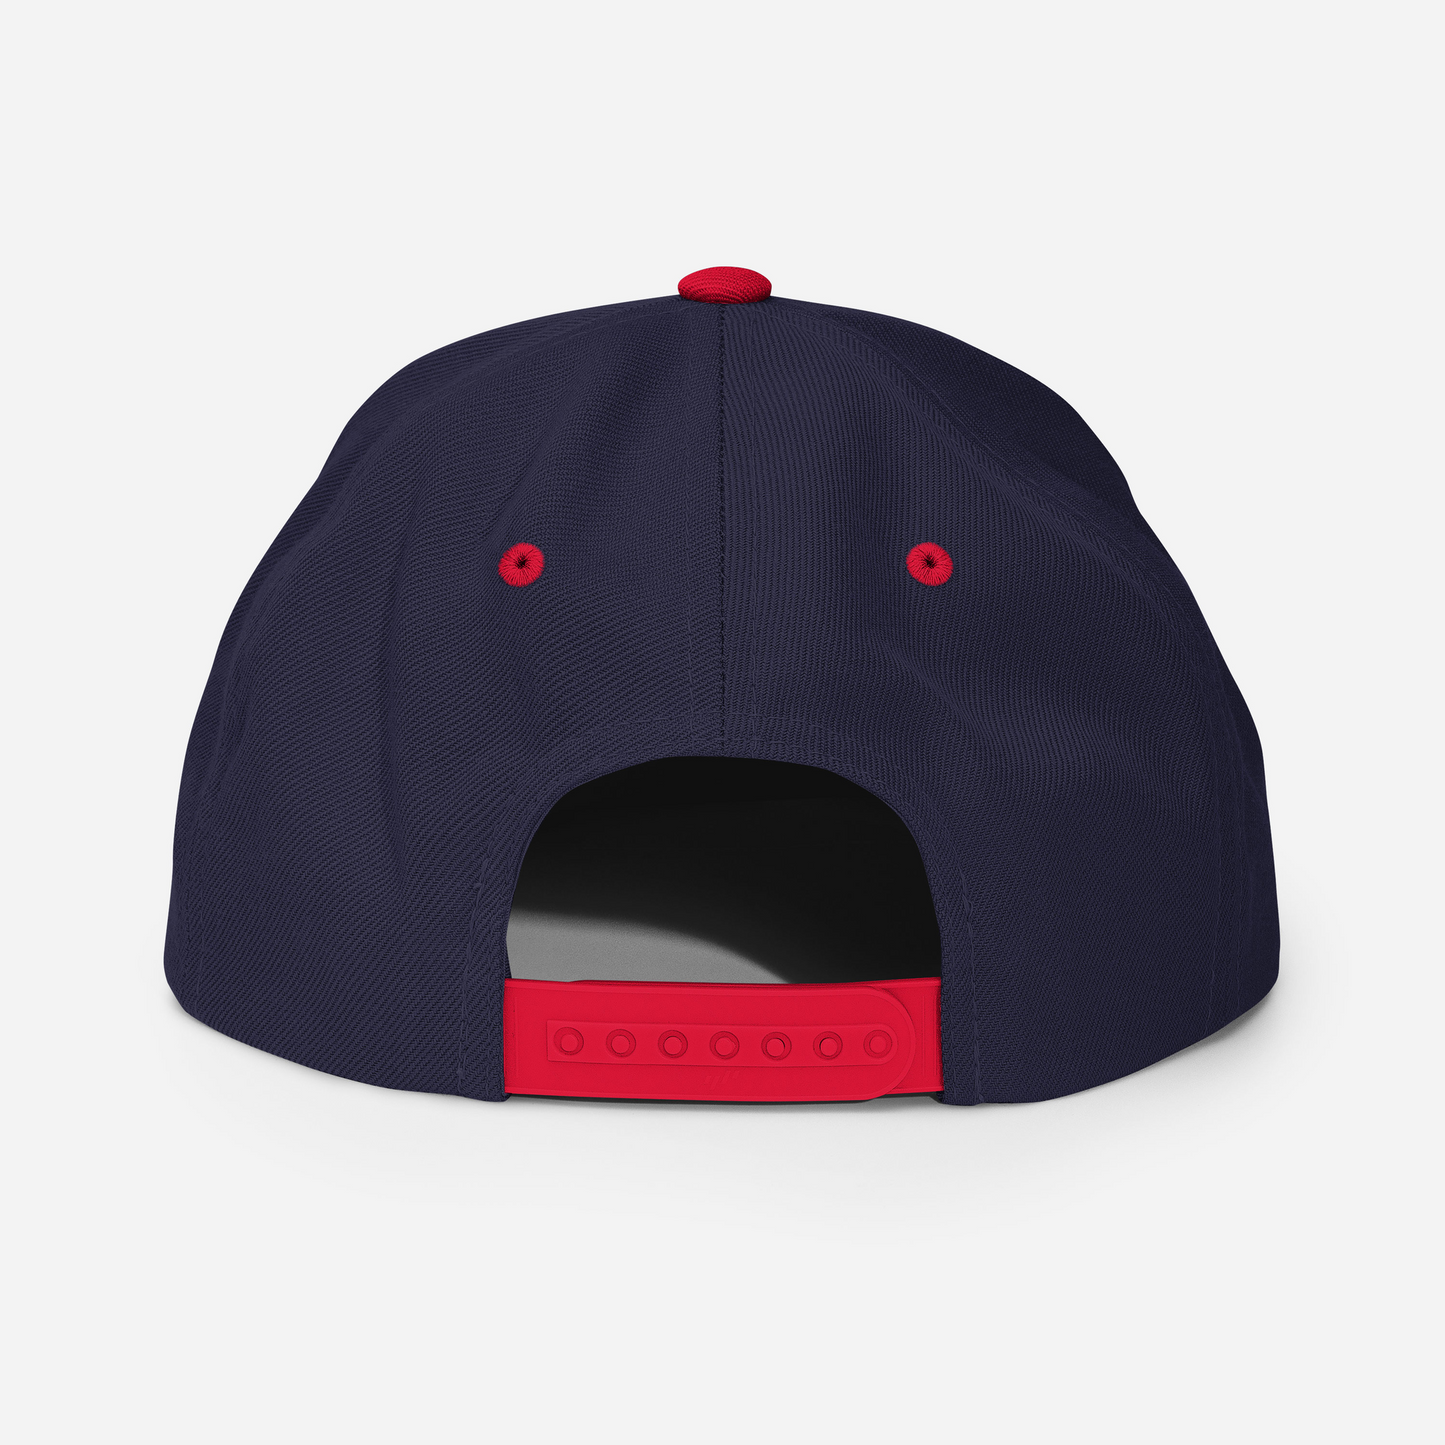 BlackFox Snapback Hat